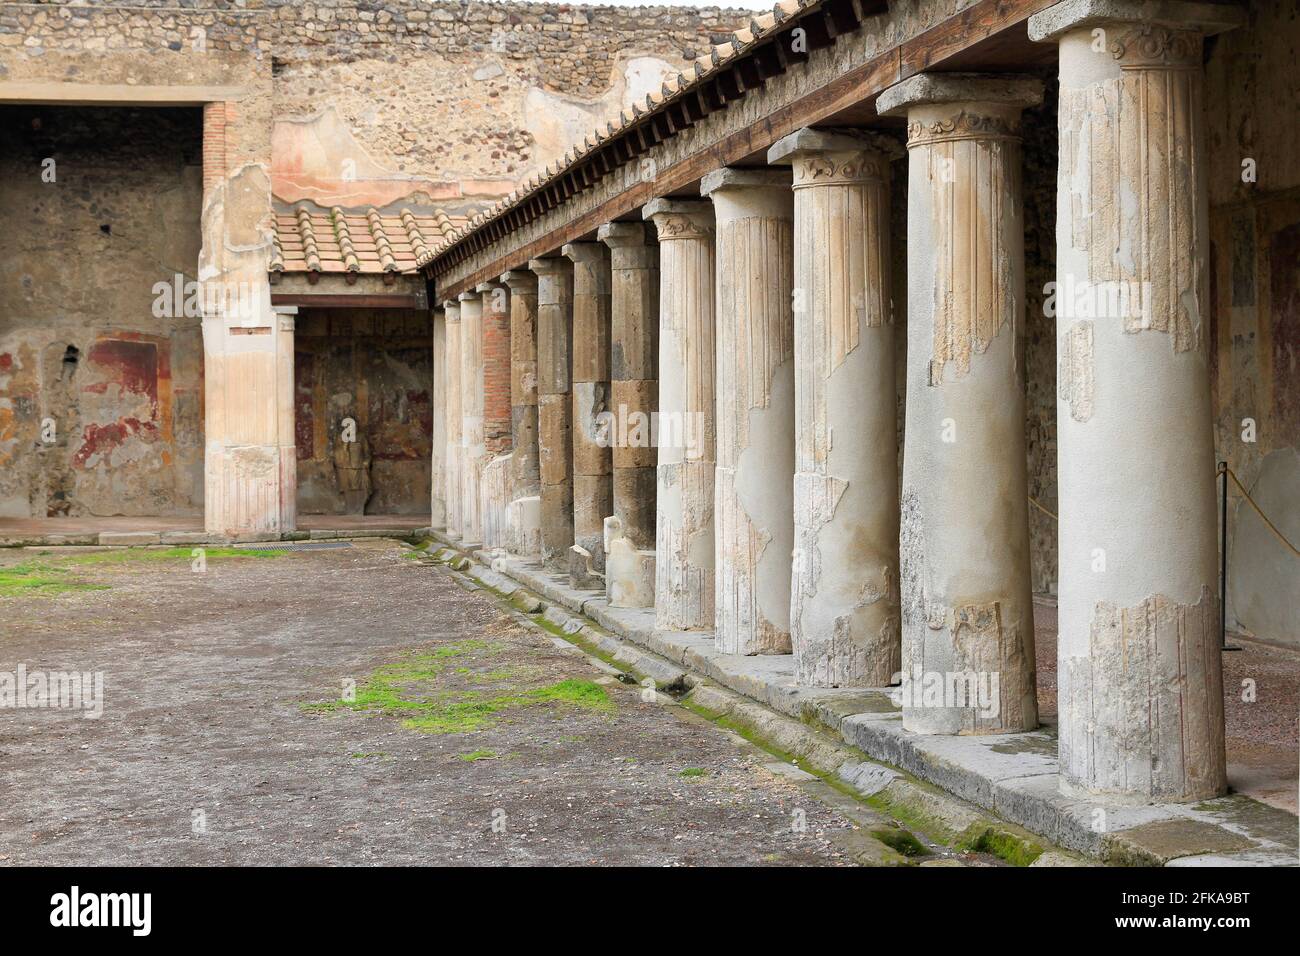 Columns in courtyard in Roman villa in Pompeii, Italy Stock Photo